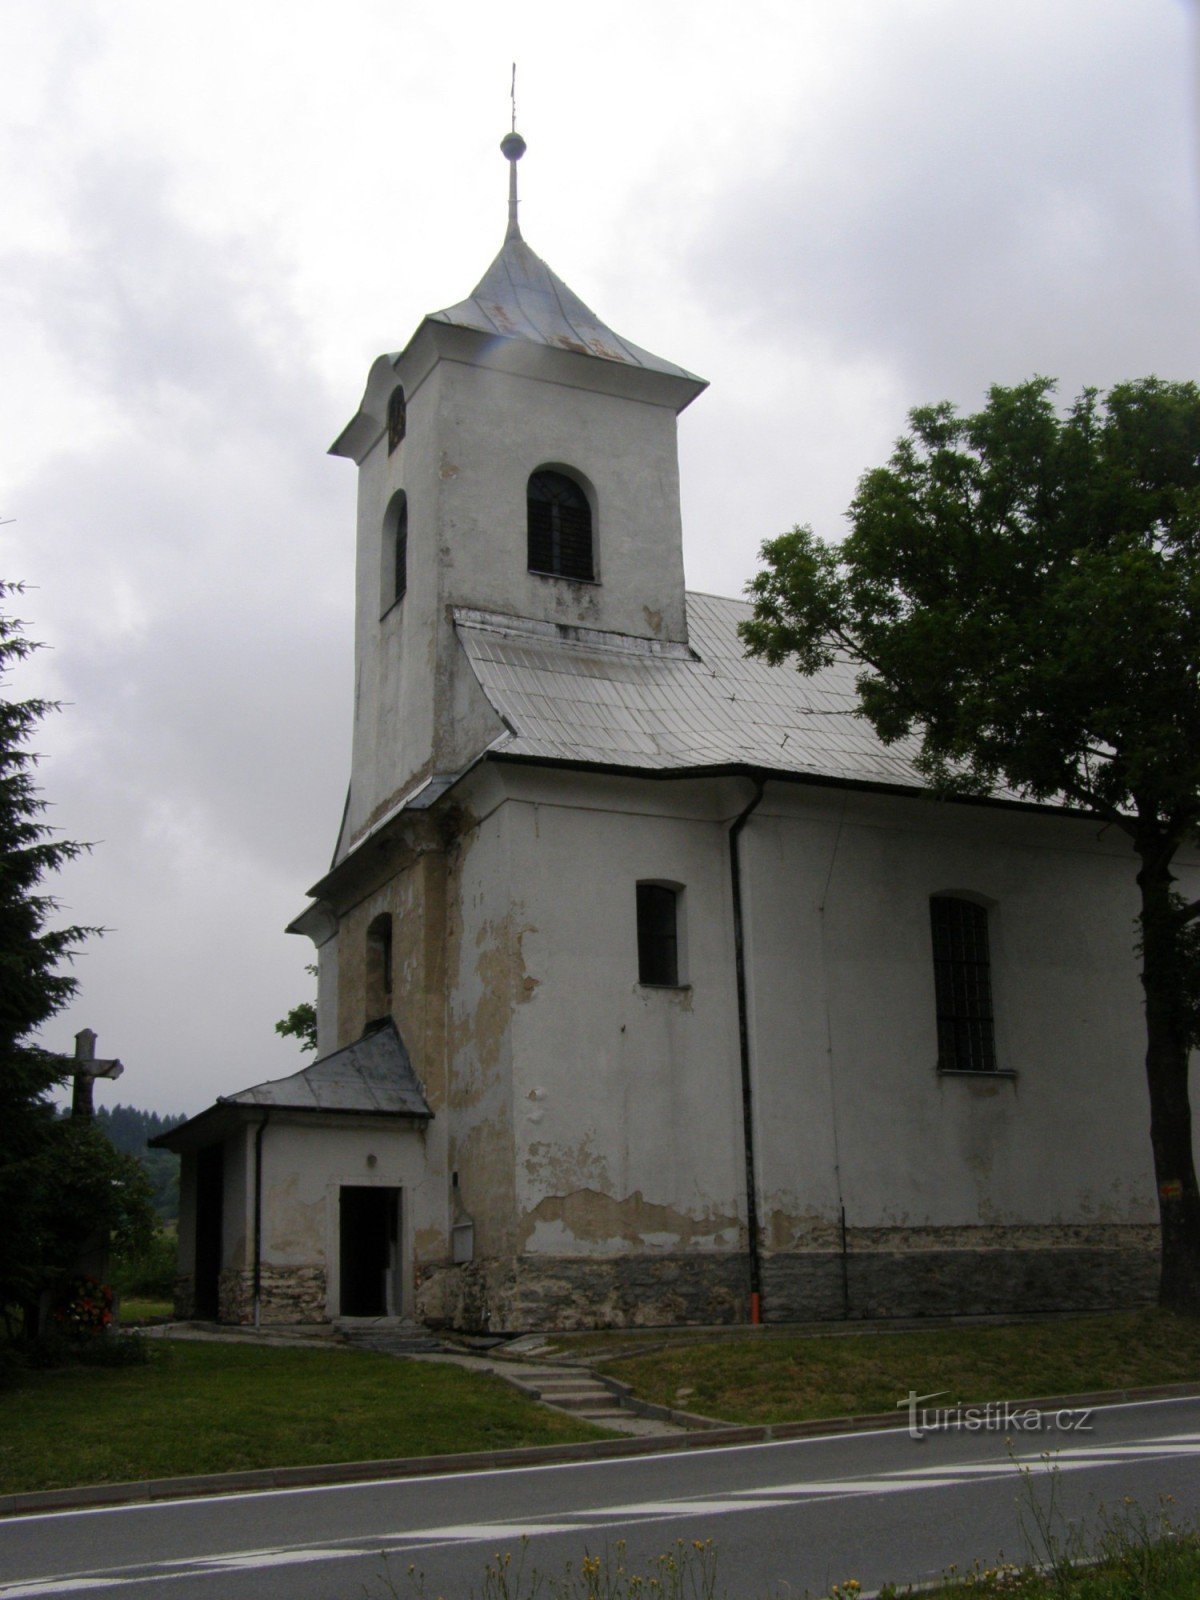 Ostružná - Biserica celor Trei Regi